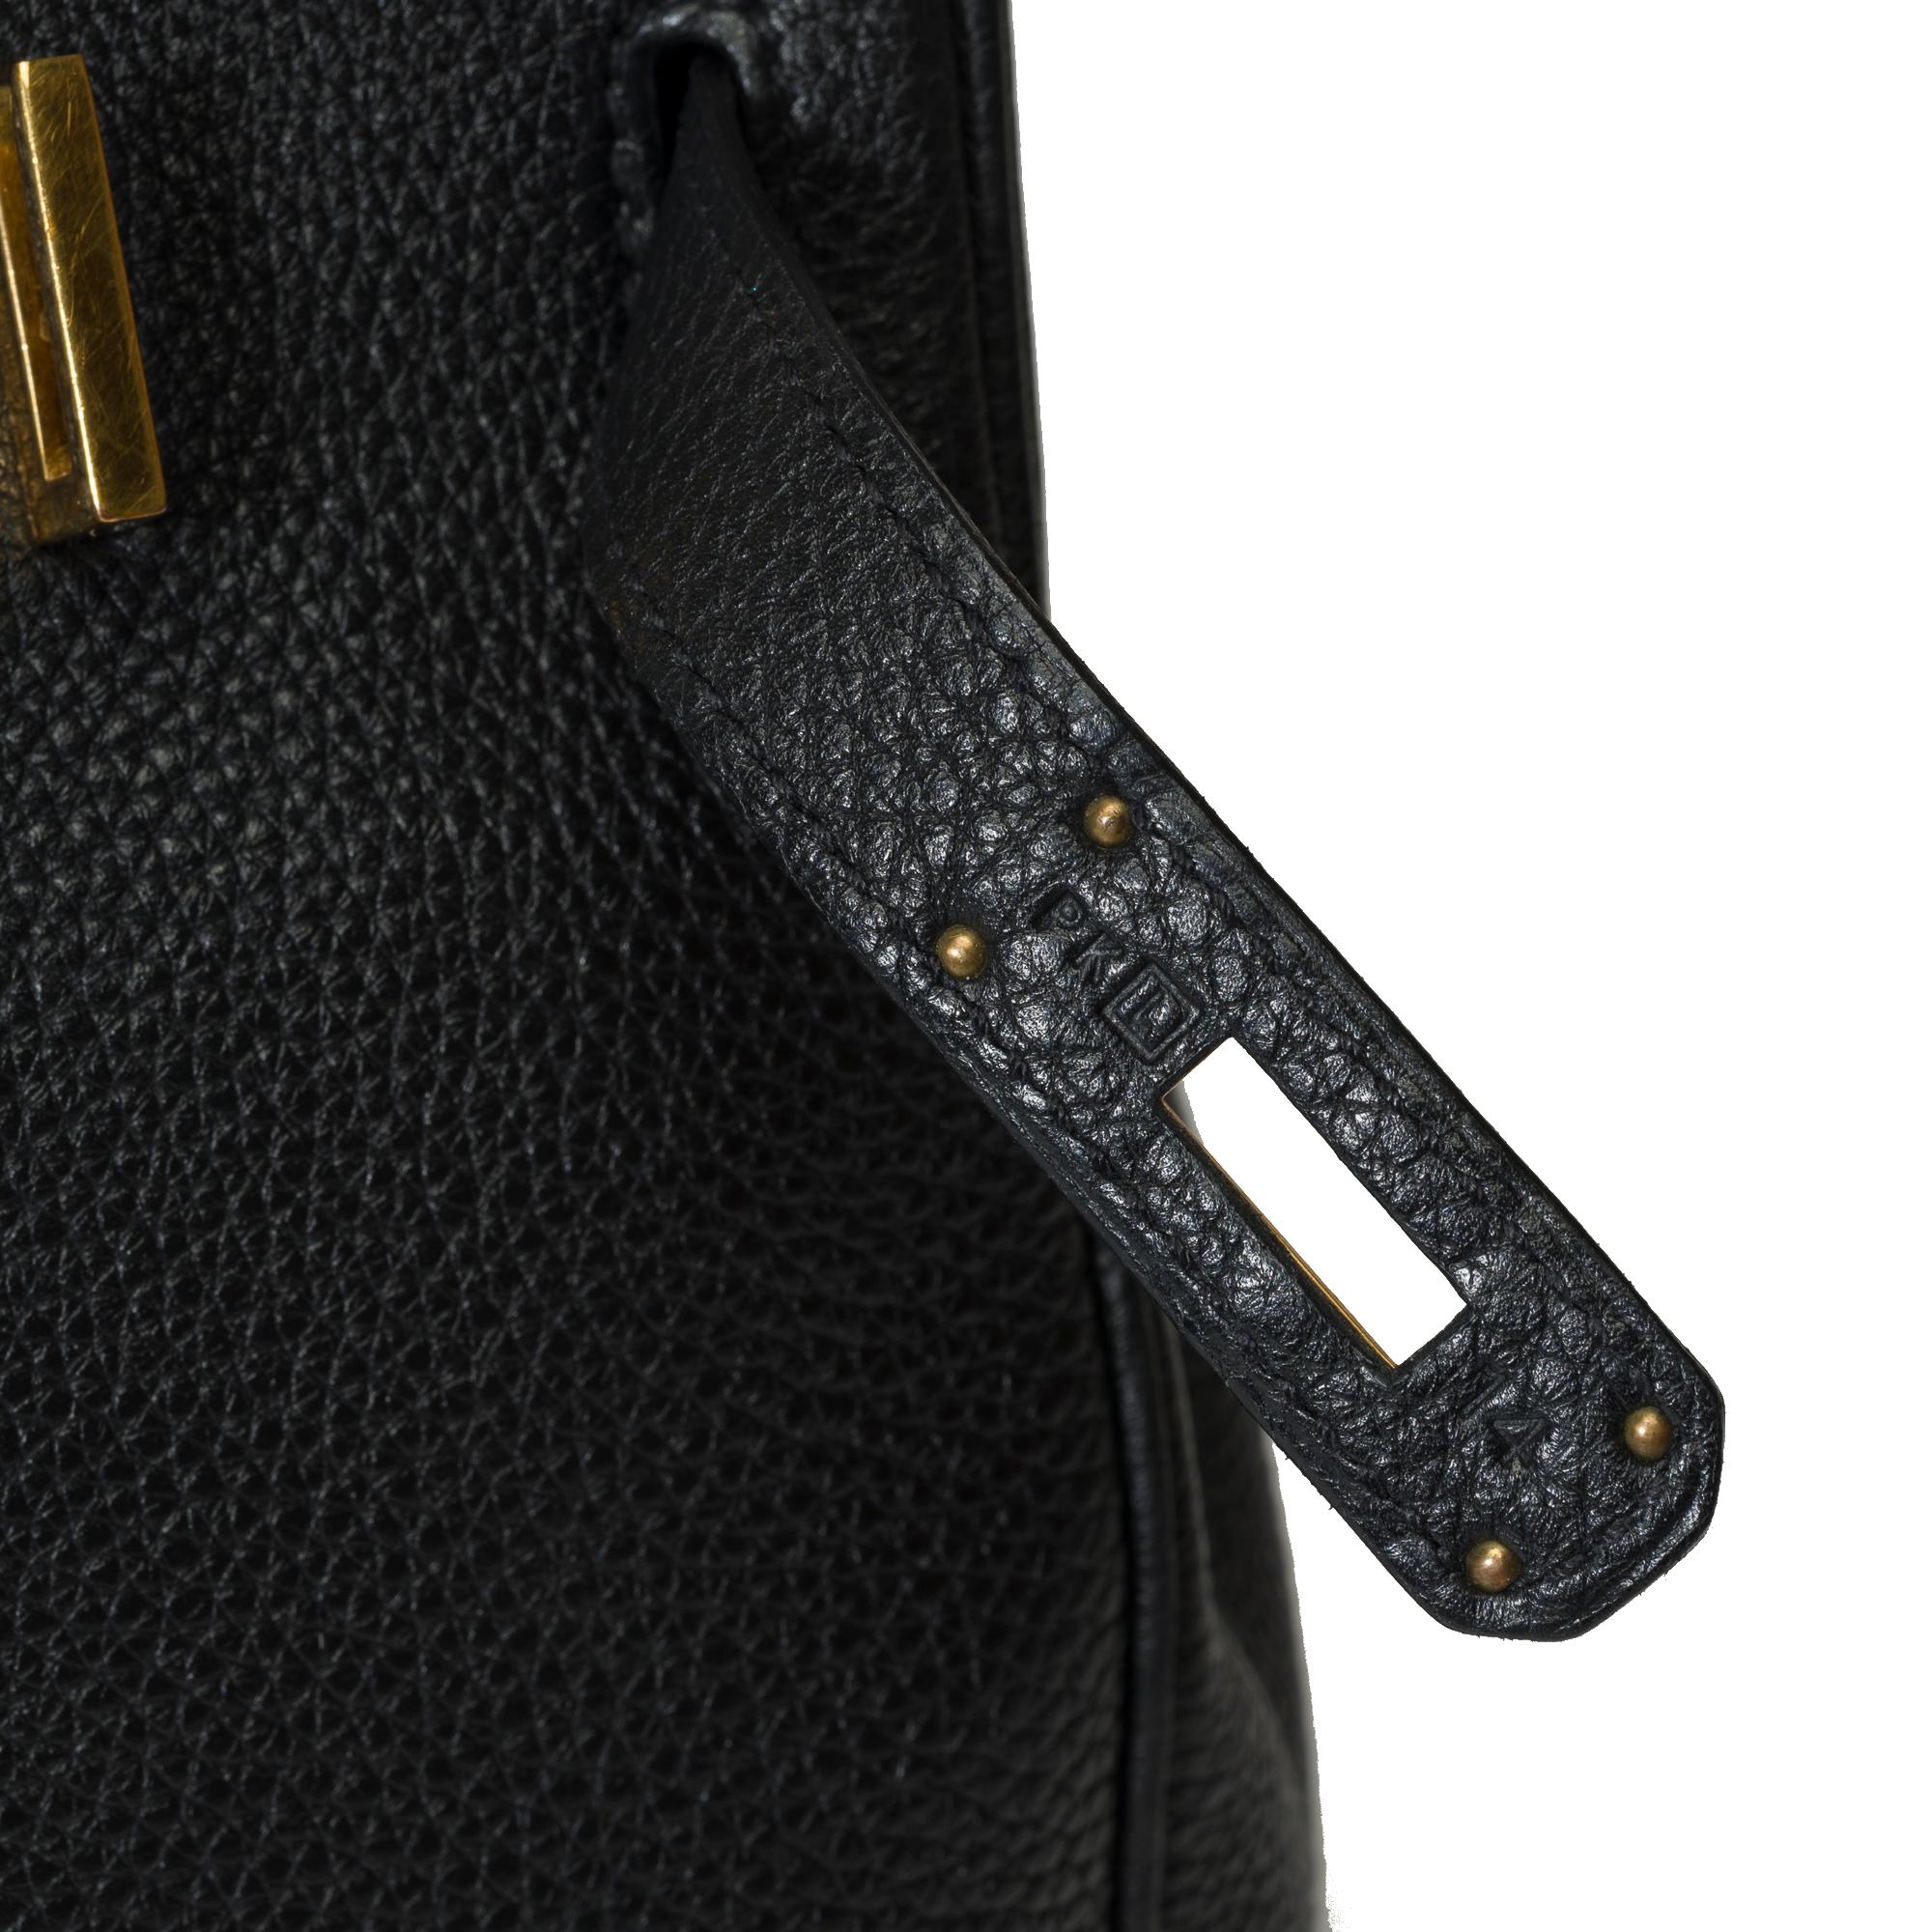 Stunning Hermes Birkin 30 handbag in Black Togo leather, GHW 5